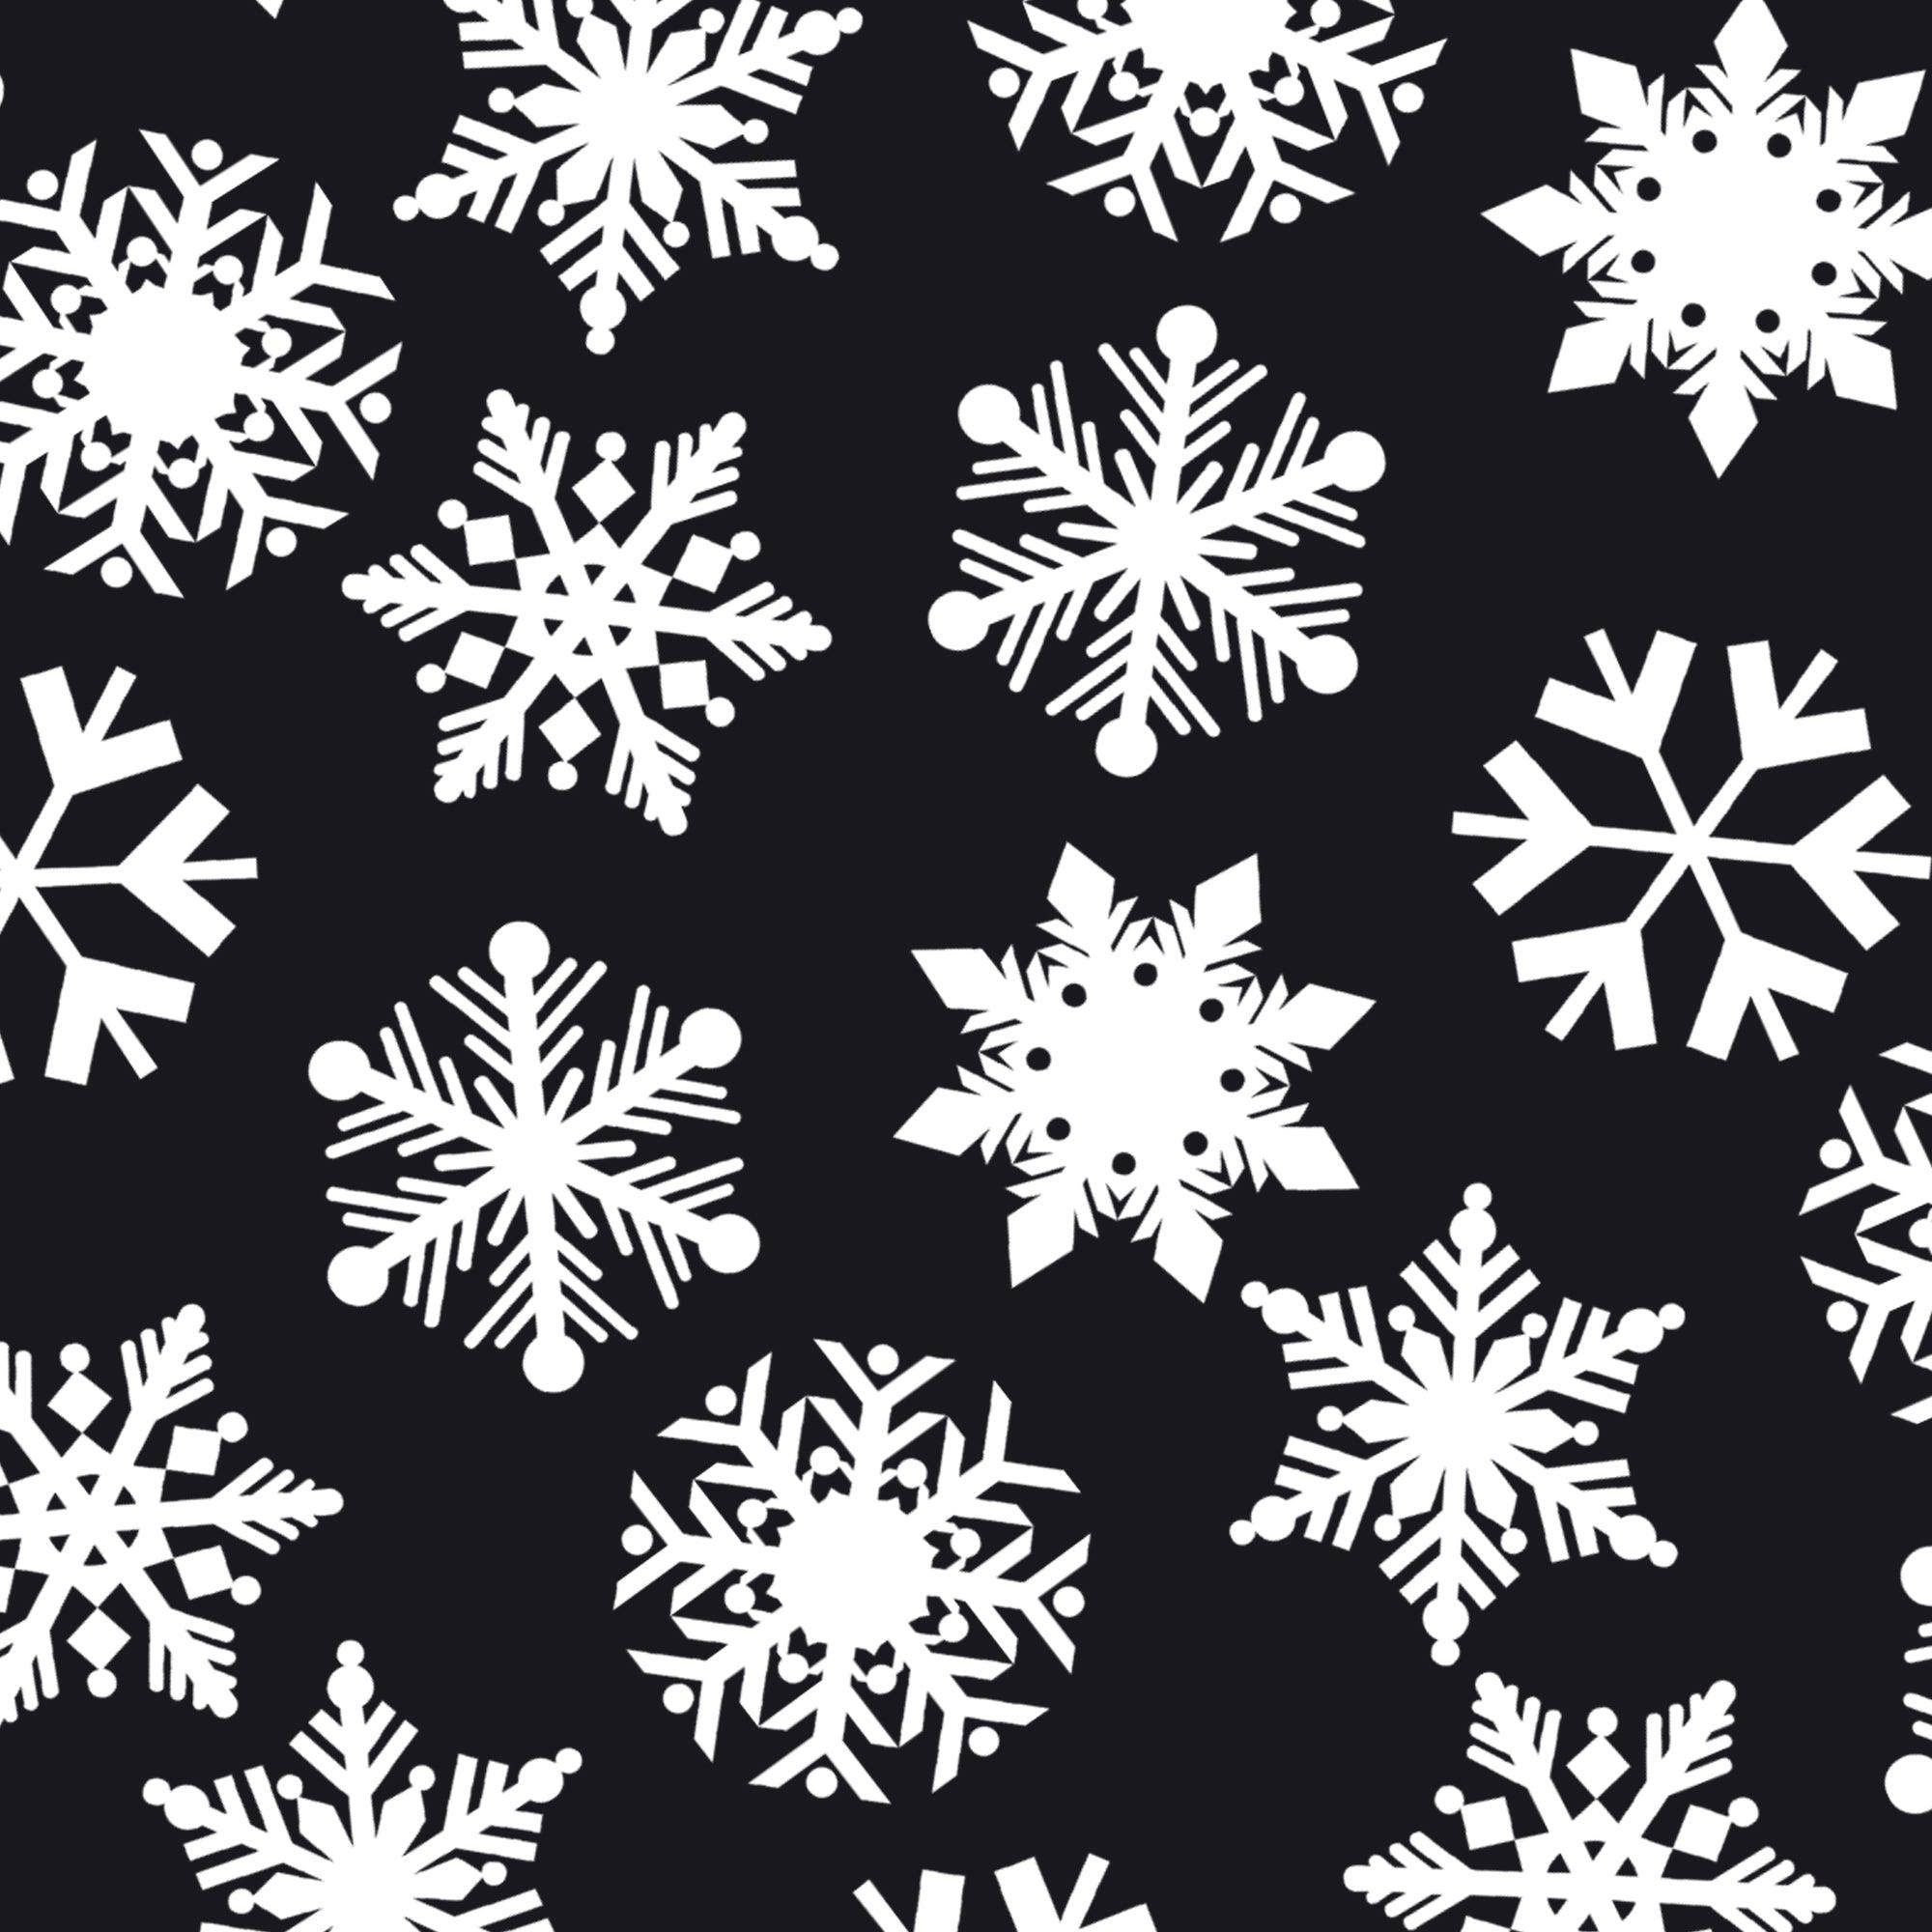 Snowflake Window Stickers: Pack 3 (24 snowflakes @ approx 150mm diameter) Christmas Window Display